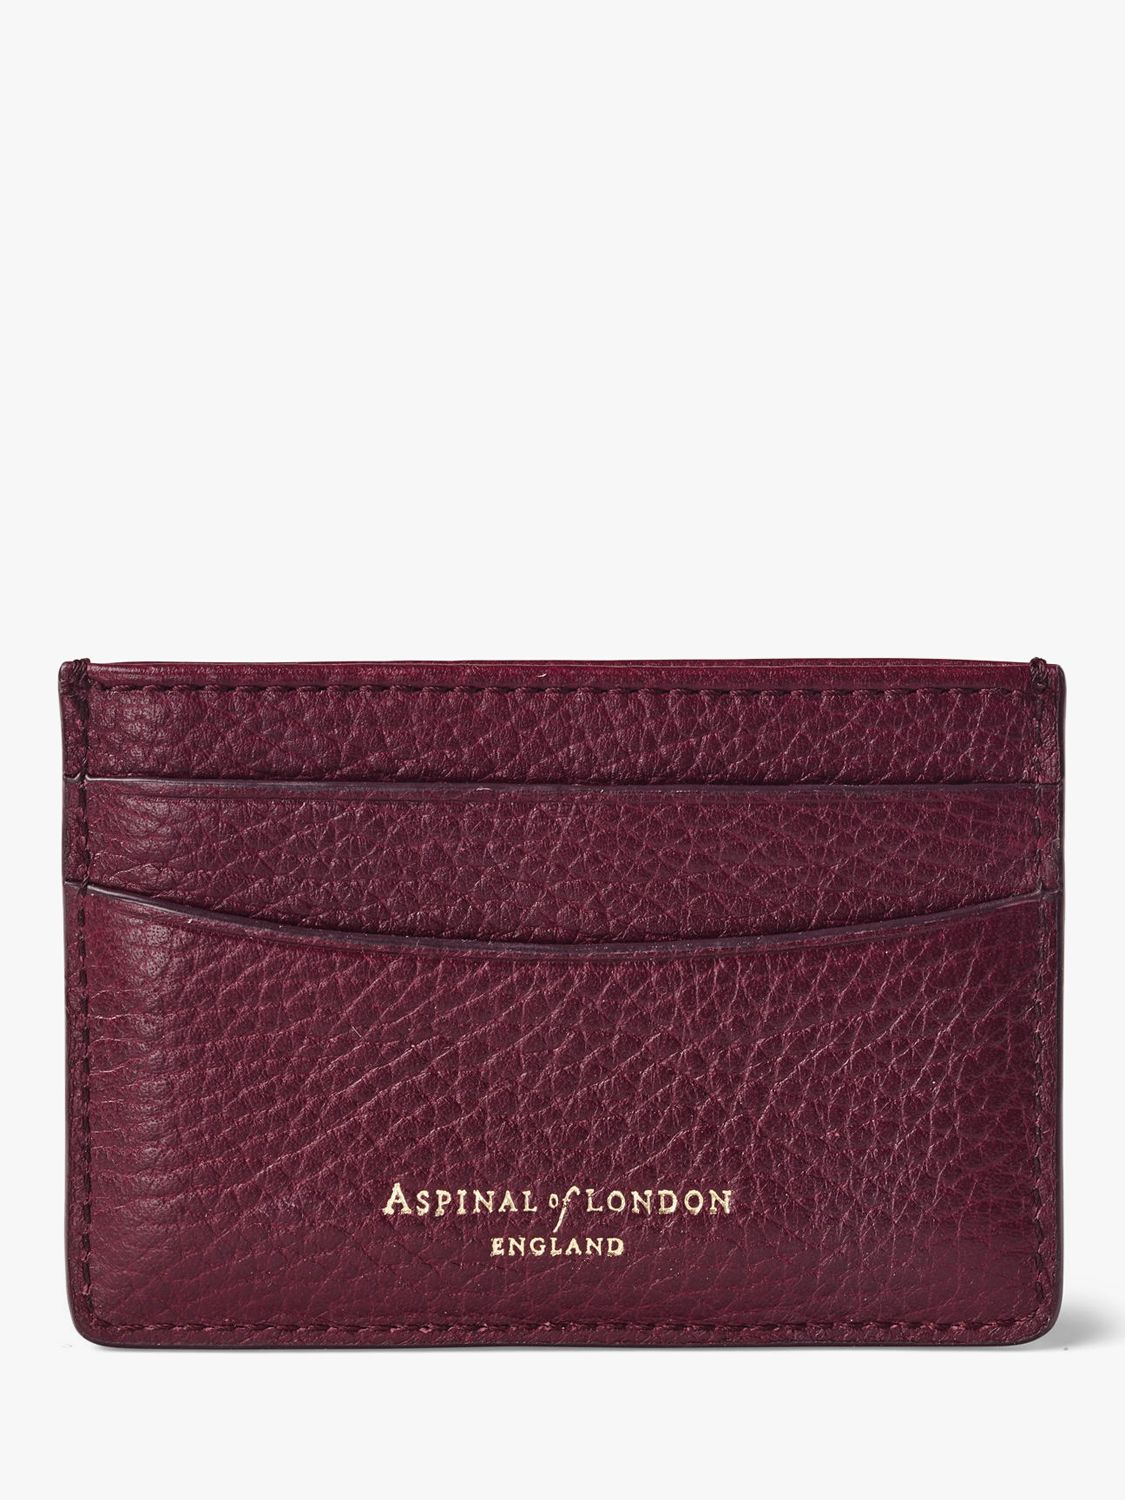 Aspinal of London Pebble Leather Slim Credit Card Case, Burgundy